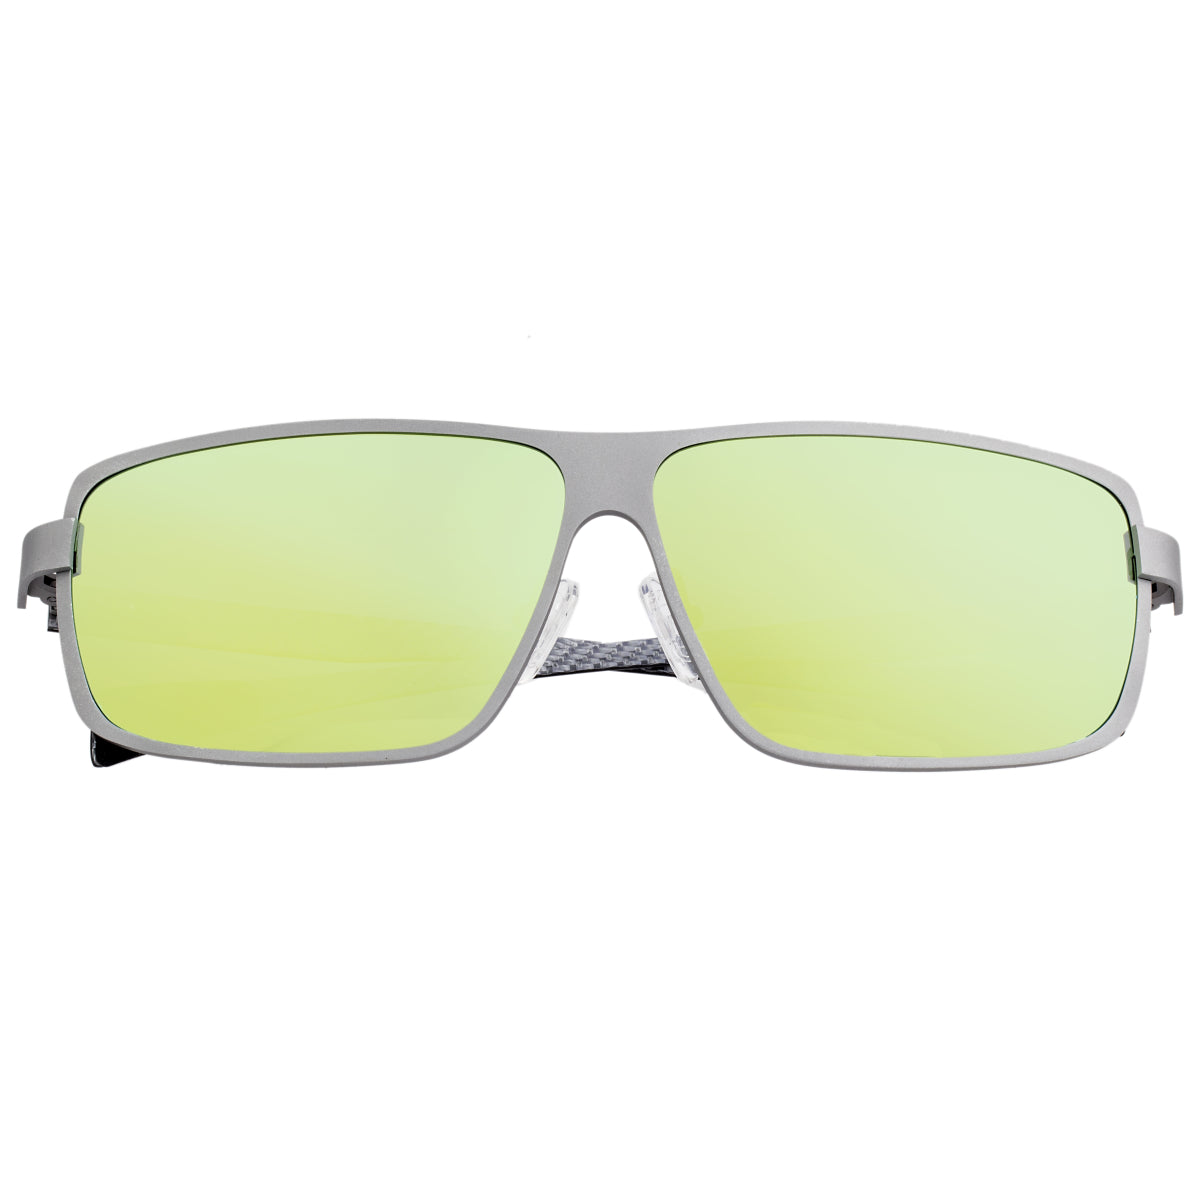 Breed Finlay Titanium Polarized Sunglasses - Silver/Yellow - BSG033SR